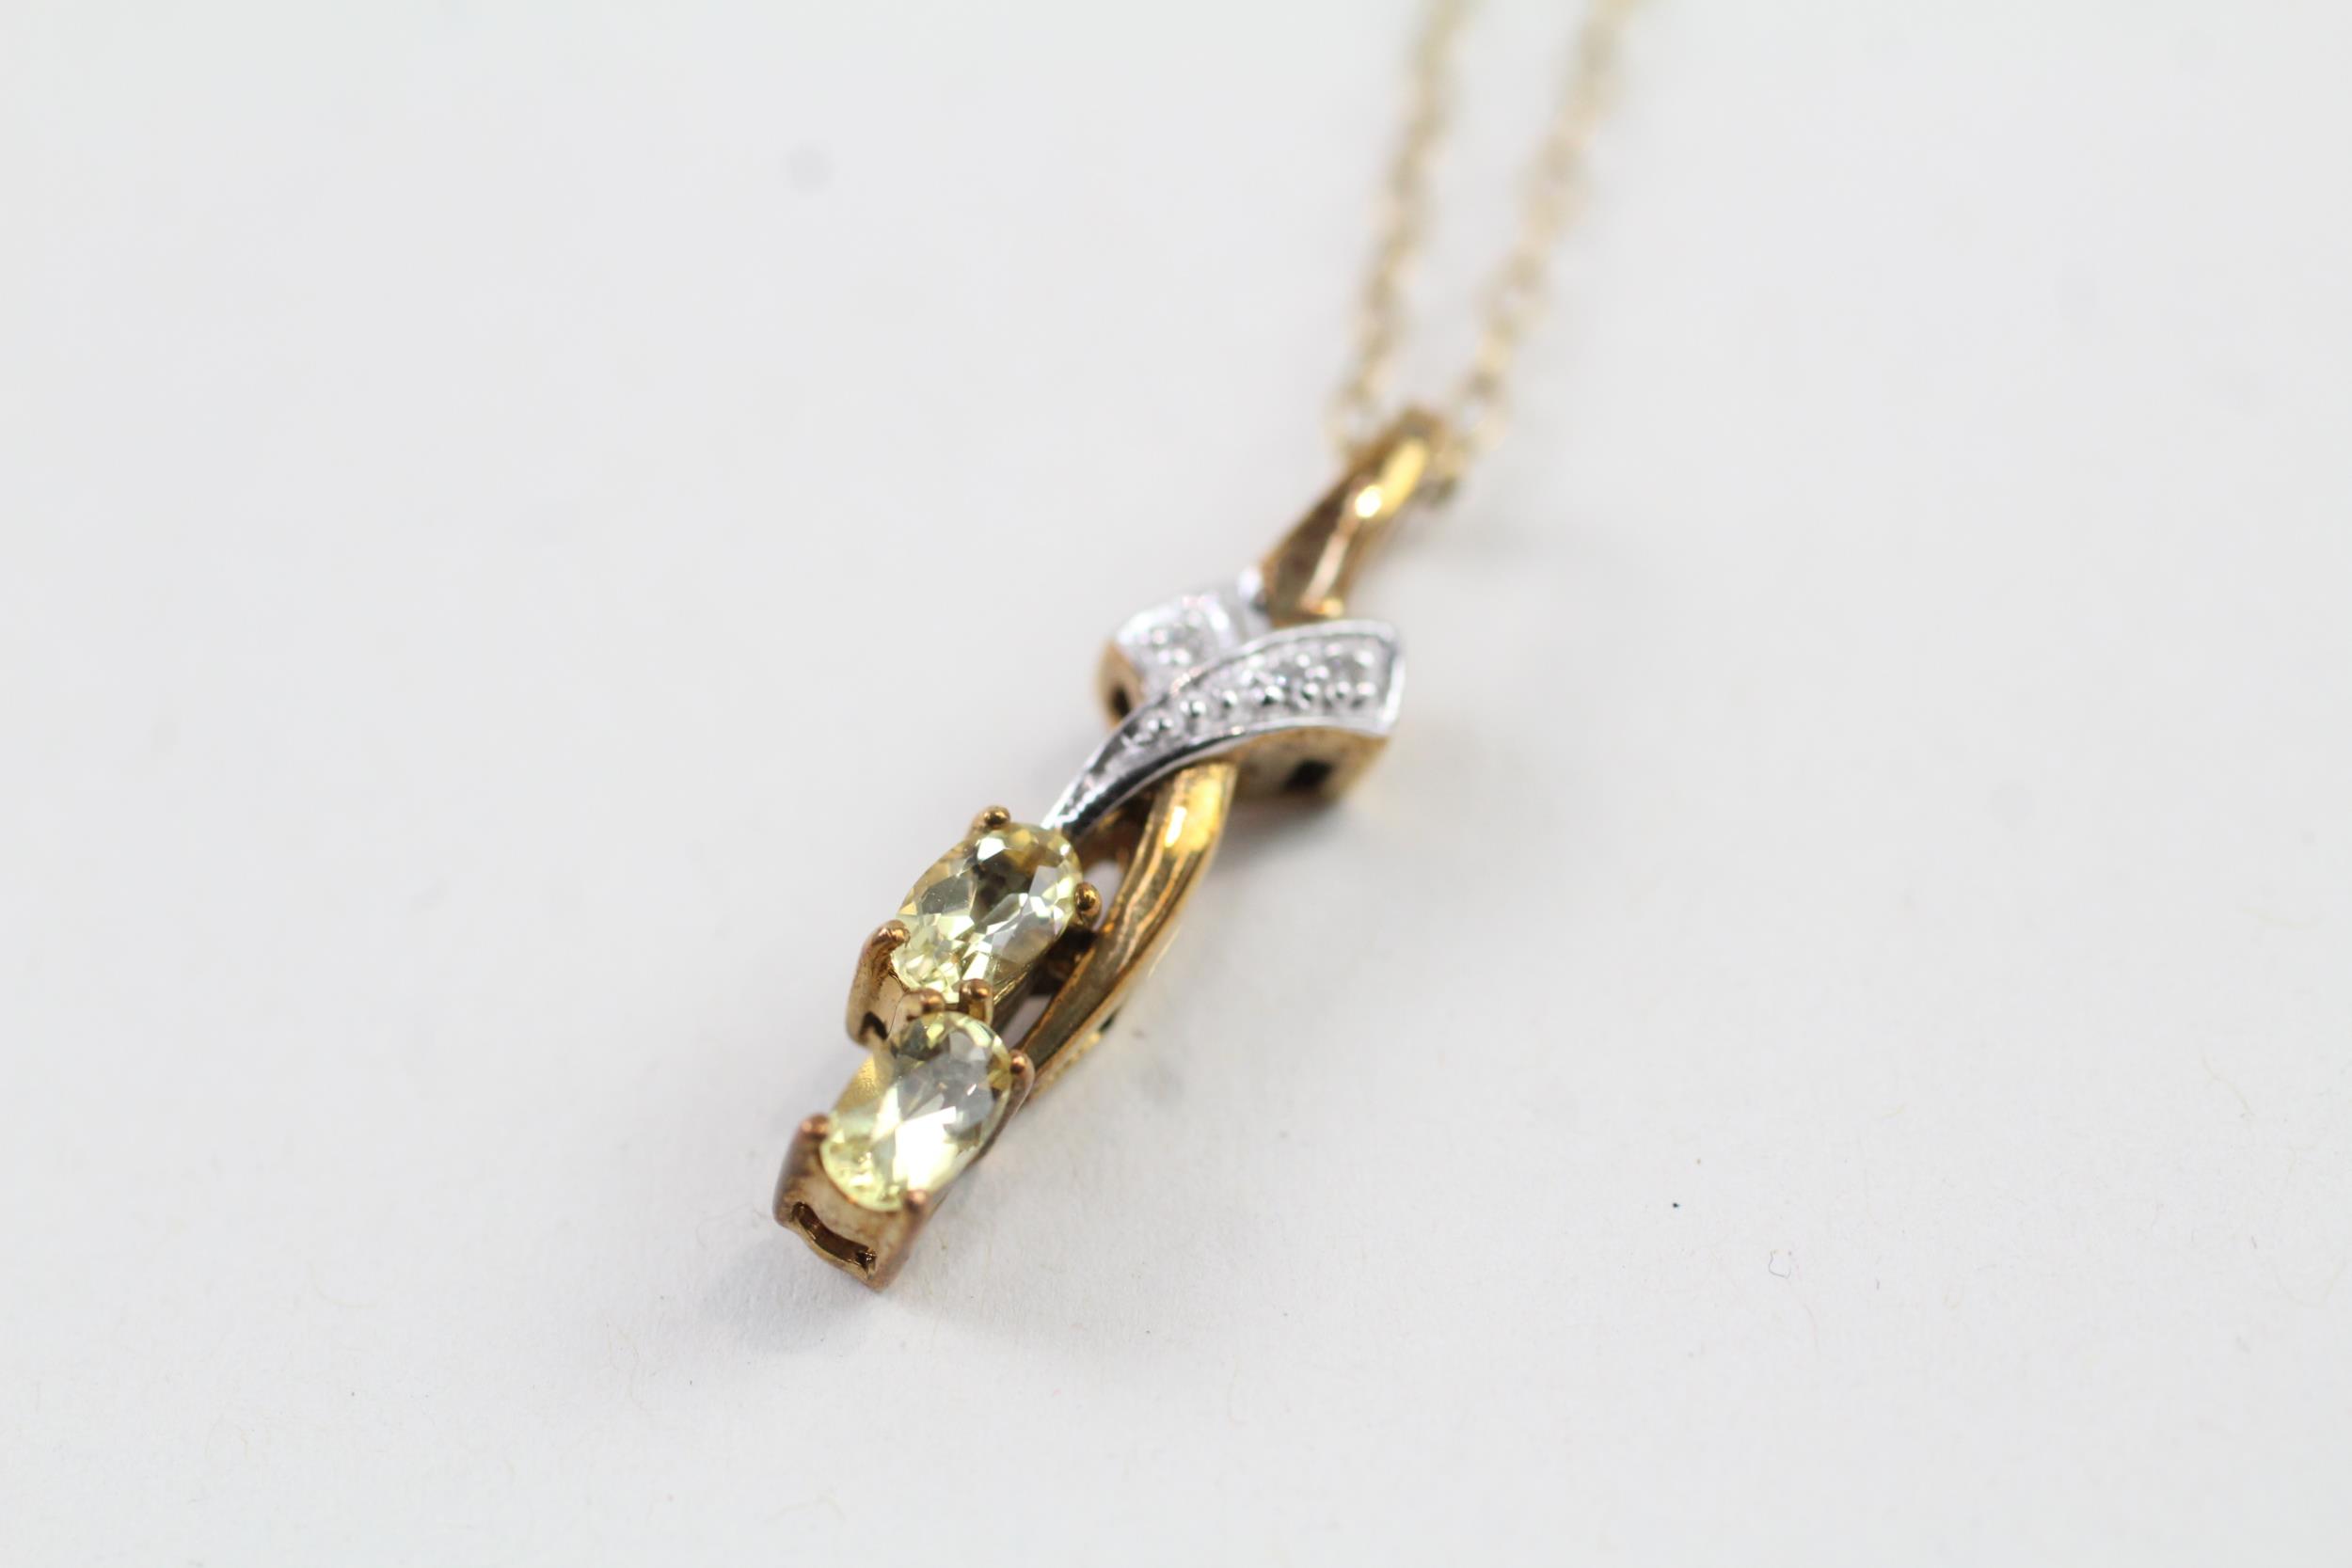 9ct gold oval cut yellow gemstone & diamond drop pendant necklace (3.1g)